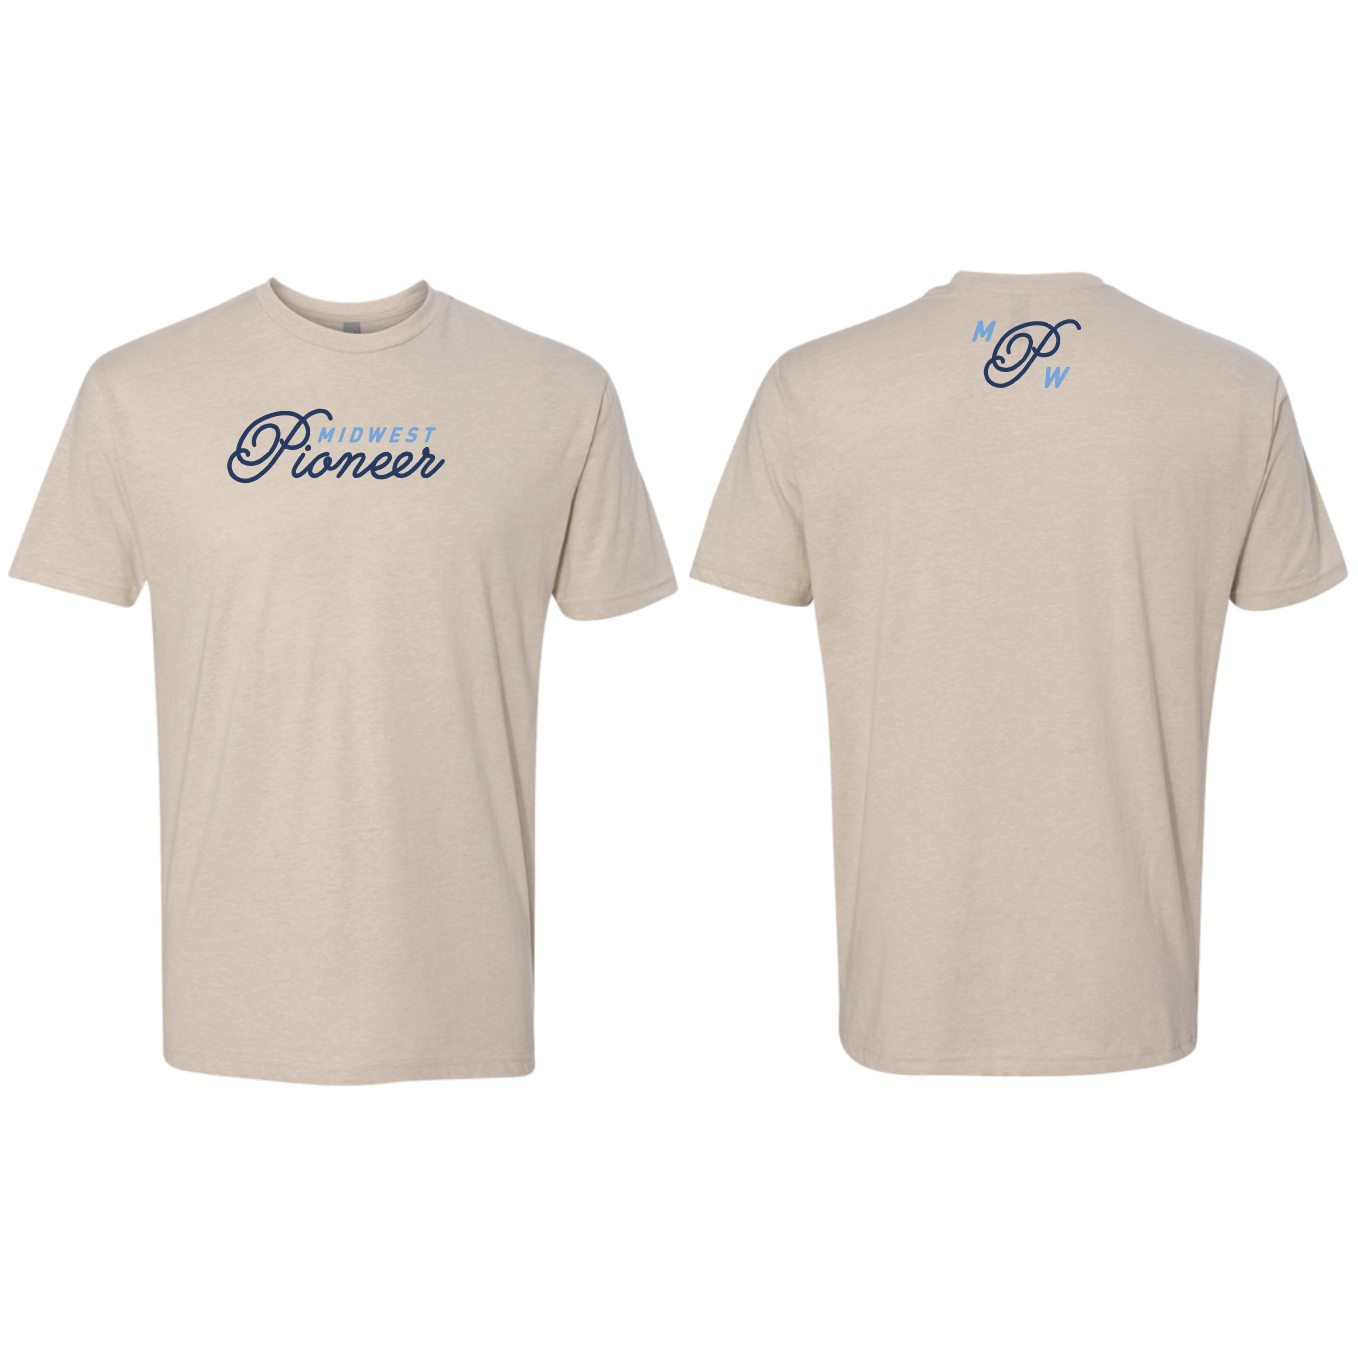 Pioneer Midwest Retro T-Shirt Men's